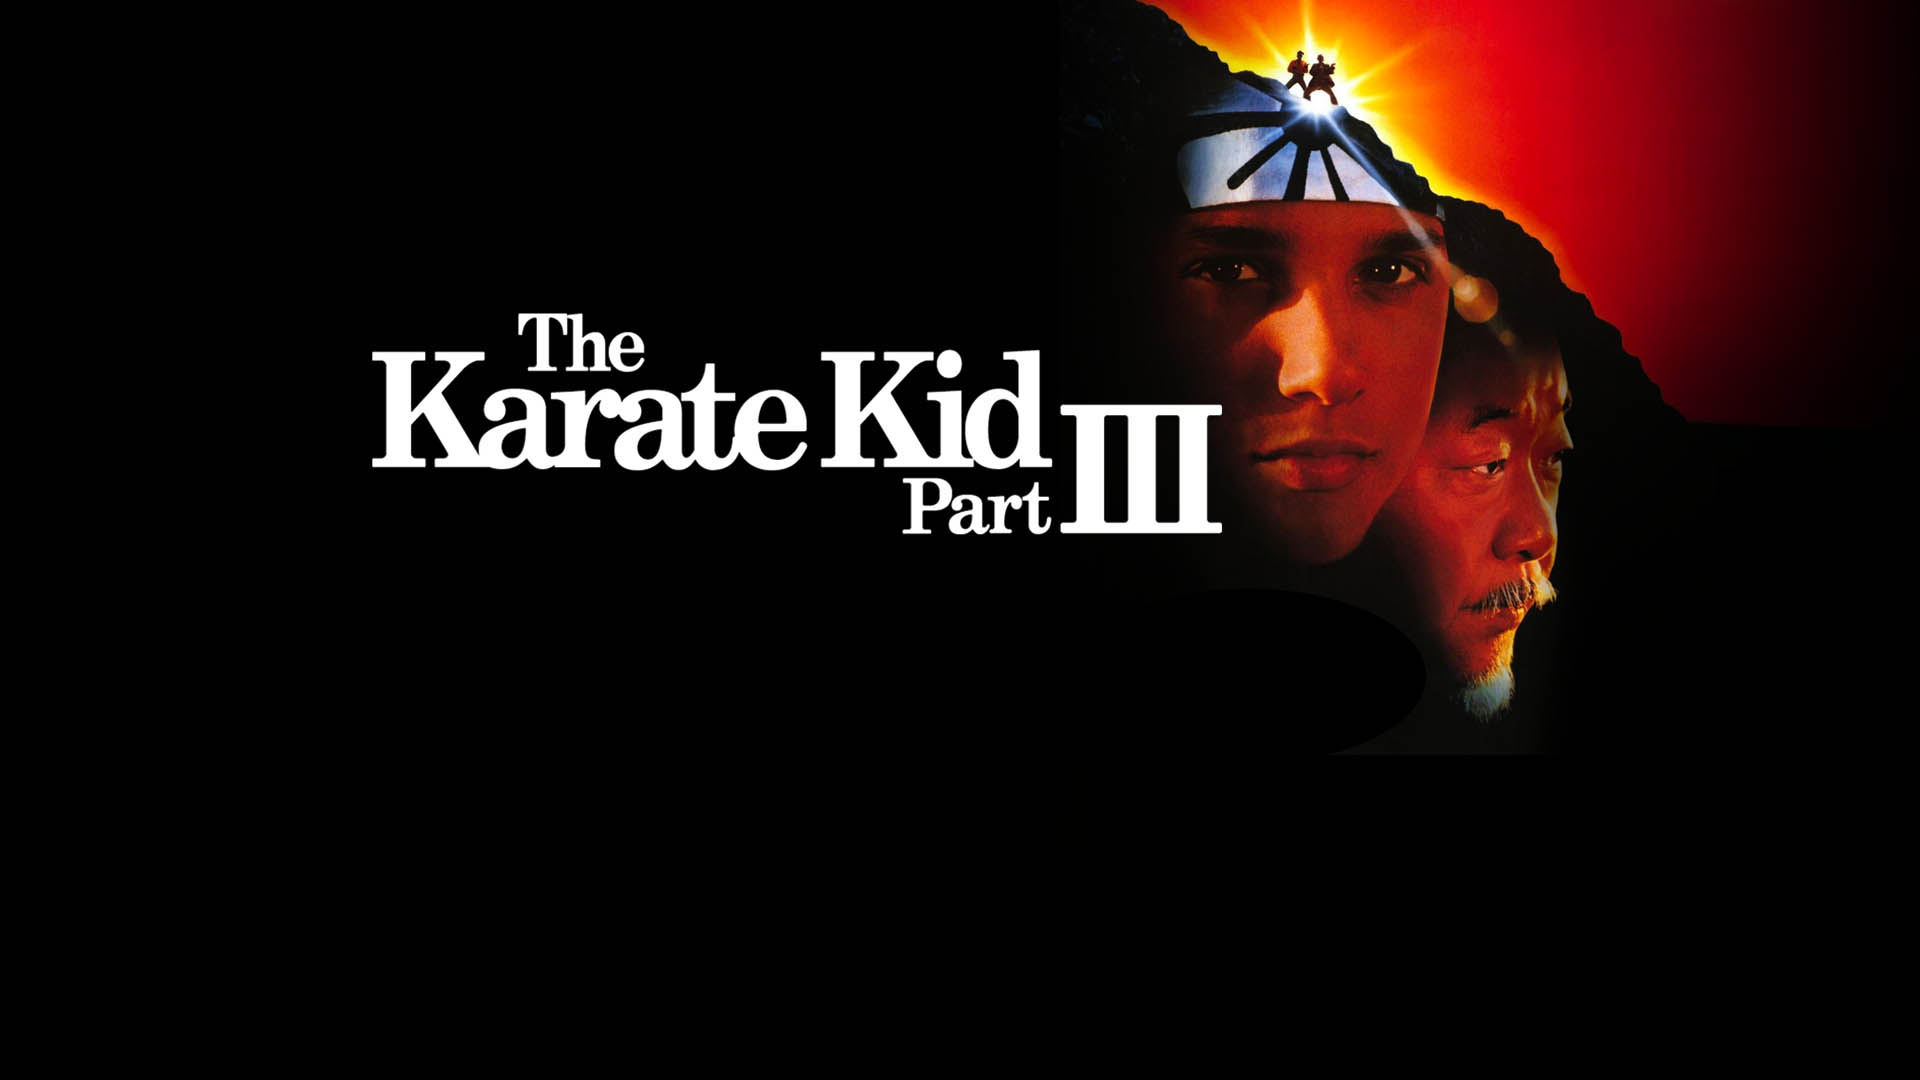 Watch The Karate Kid Part III Online | Stream Full Movies